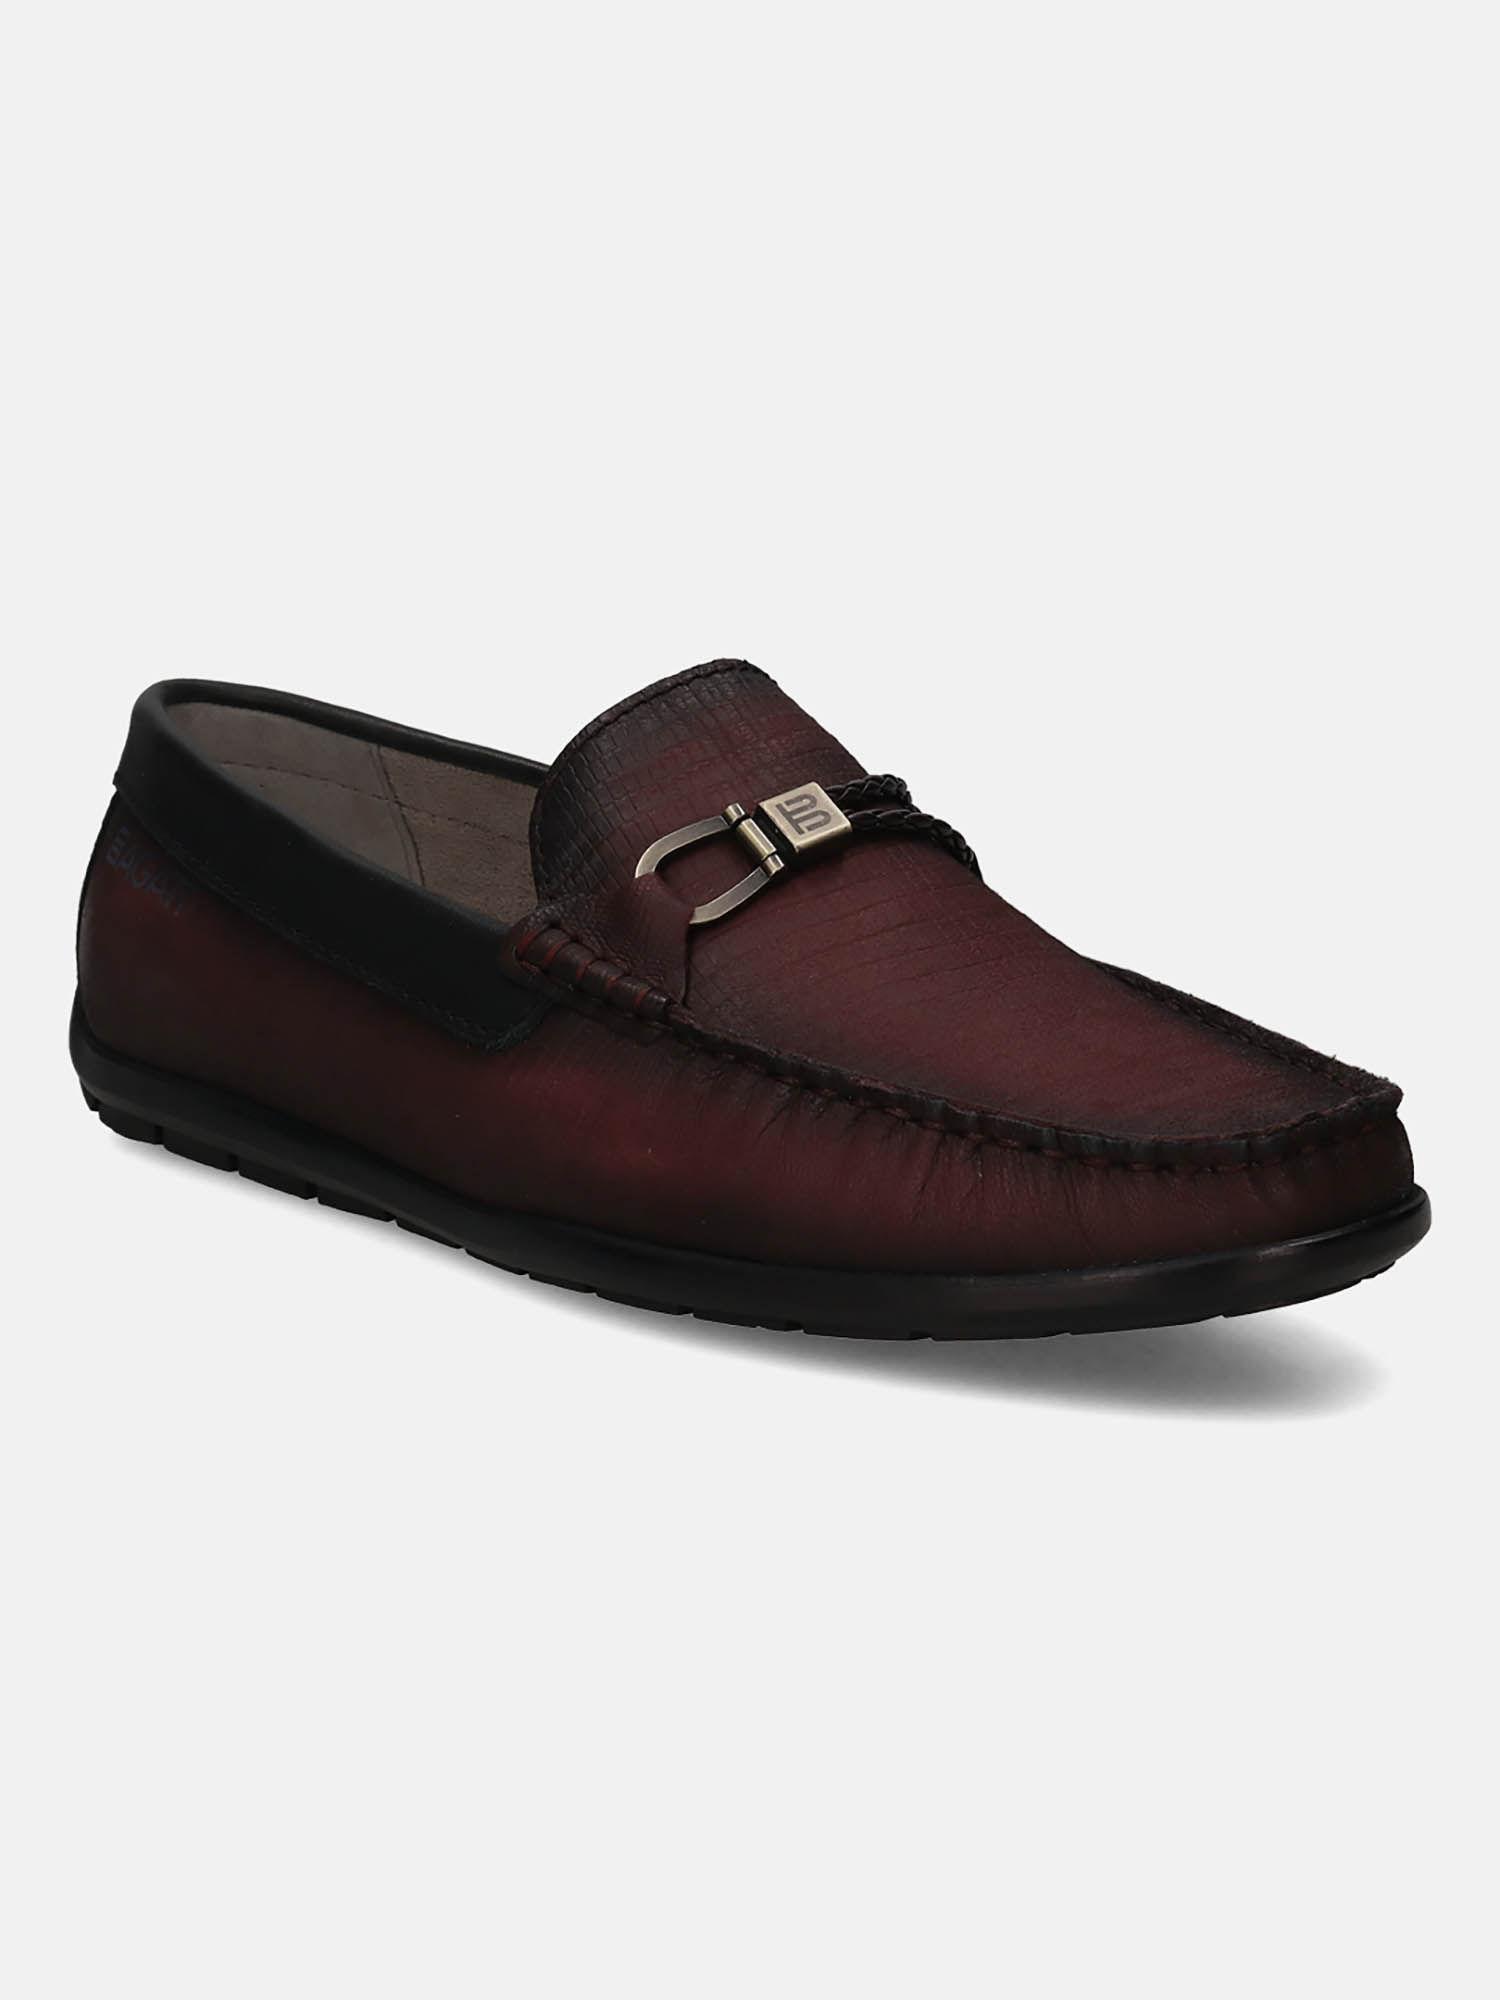 xline men bordo leather casual loafers slip-on